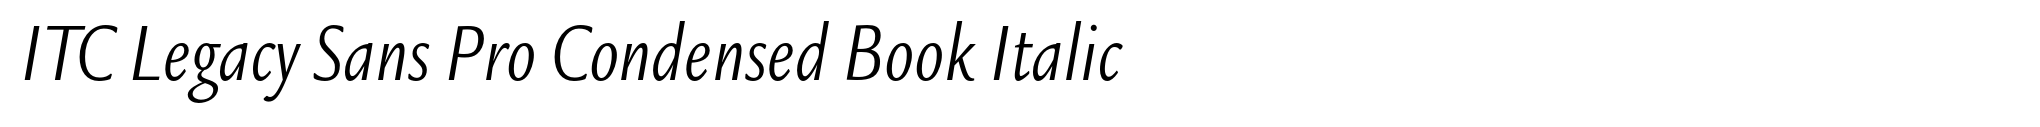 ITC Legacy Sans Pro Condensed Book Italic image